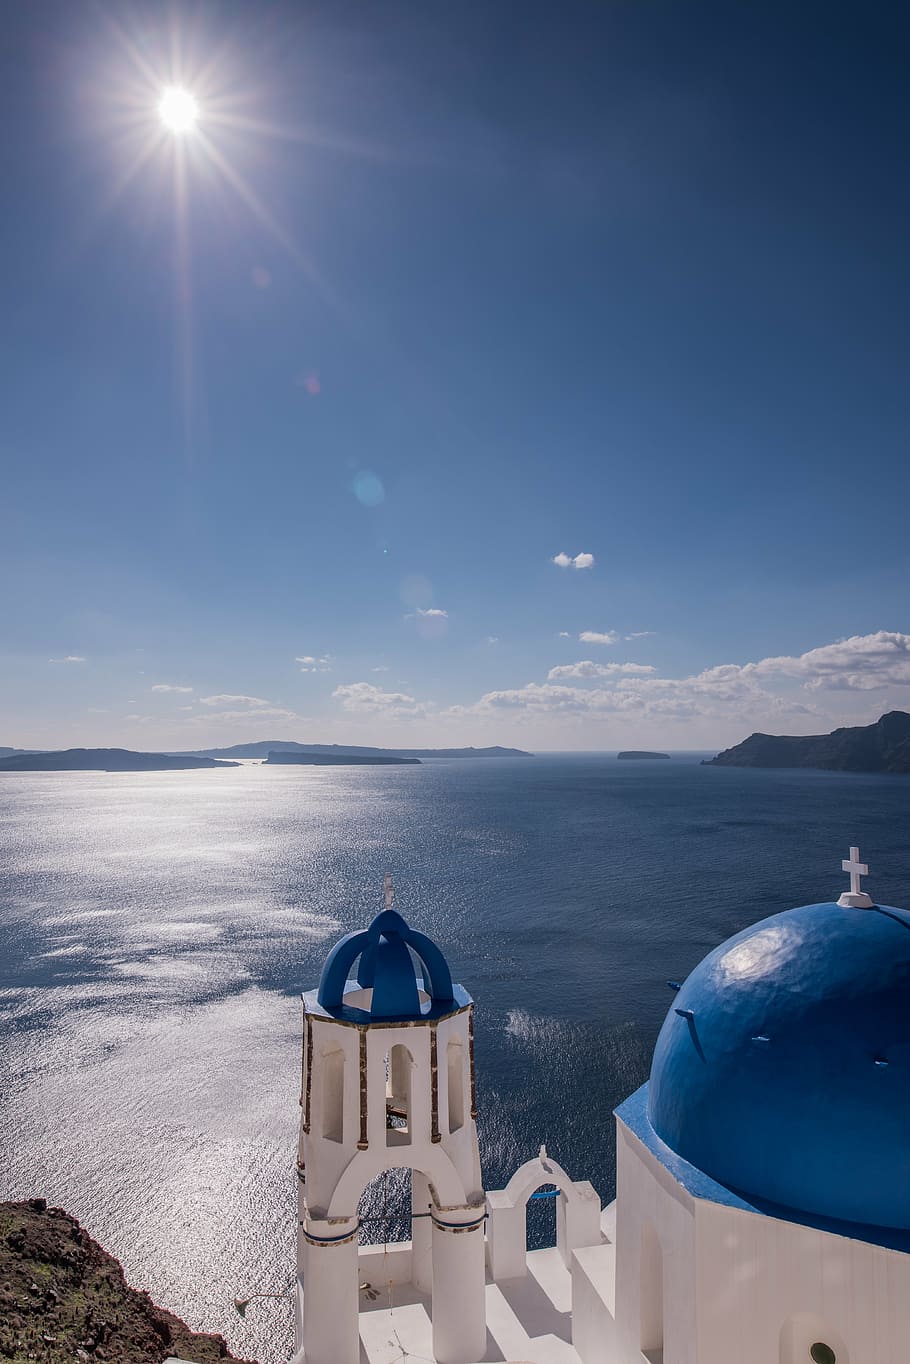 santorini, greece, santorini, greece, midday sun, blue dome, church, aegean sea, mediterranean, cyclades, travel